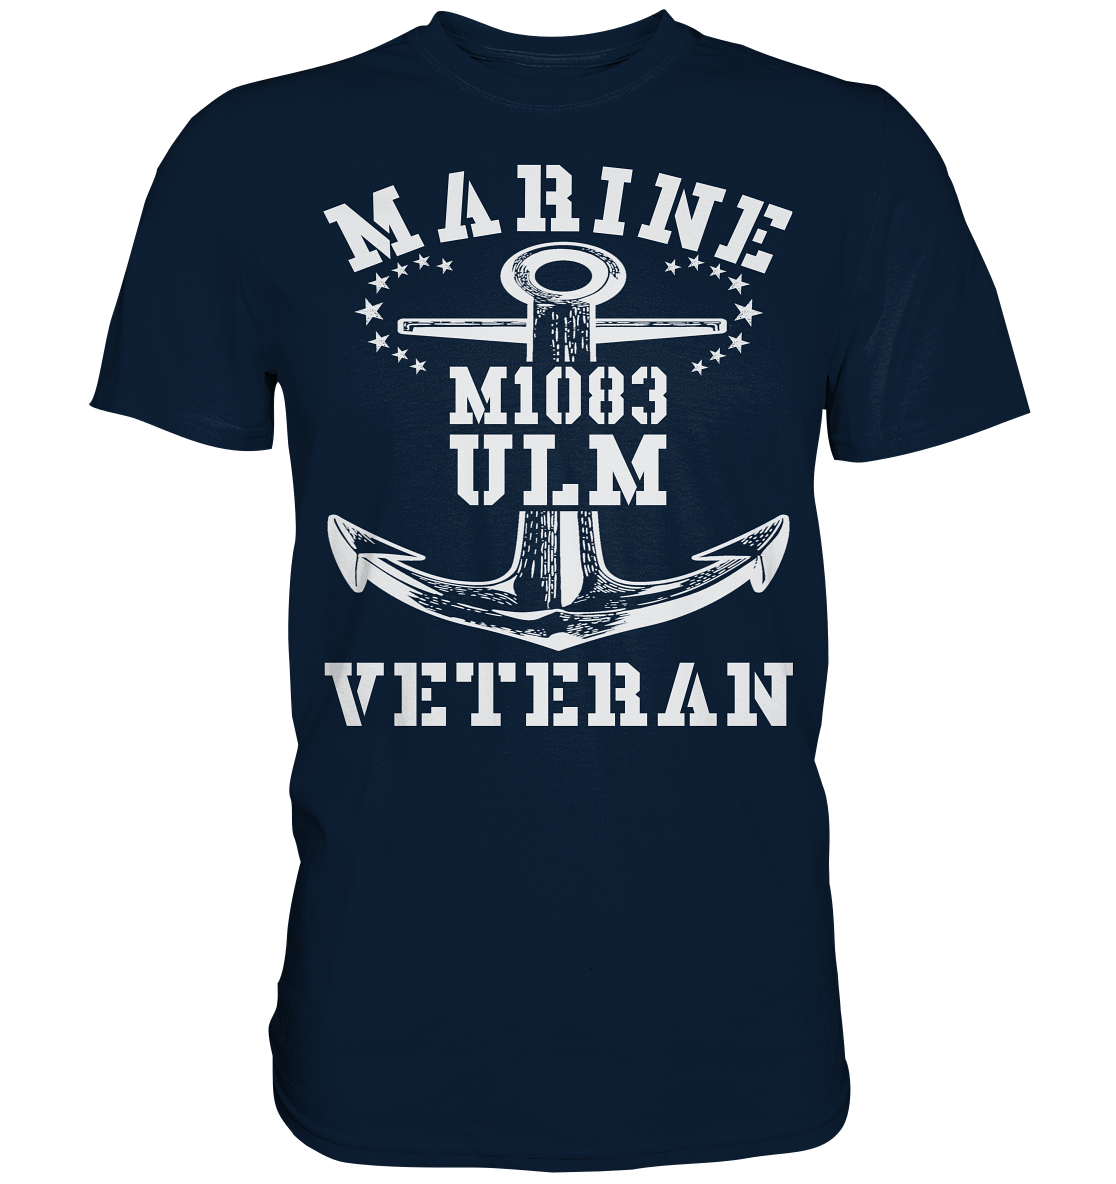 MARINE VETERAN M1083 ULM - Premium Shirt